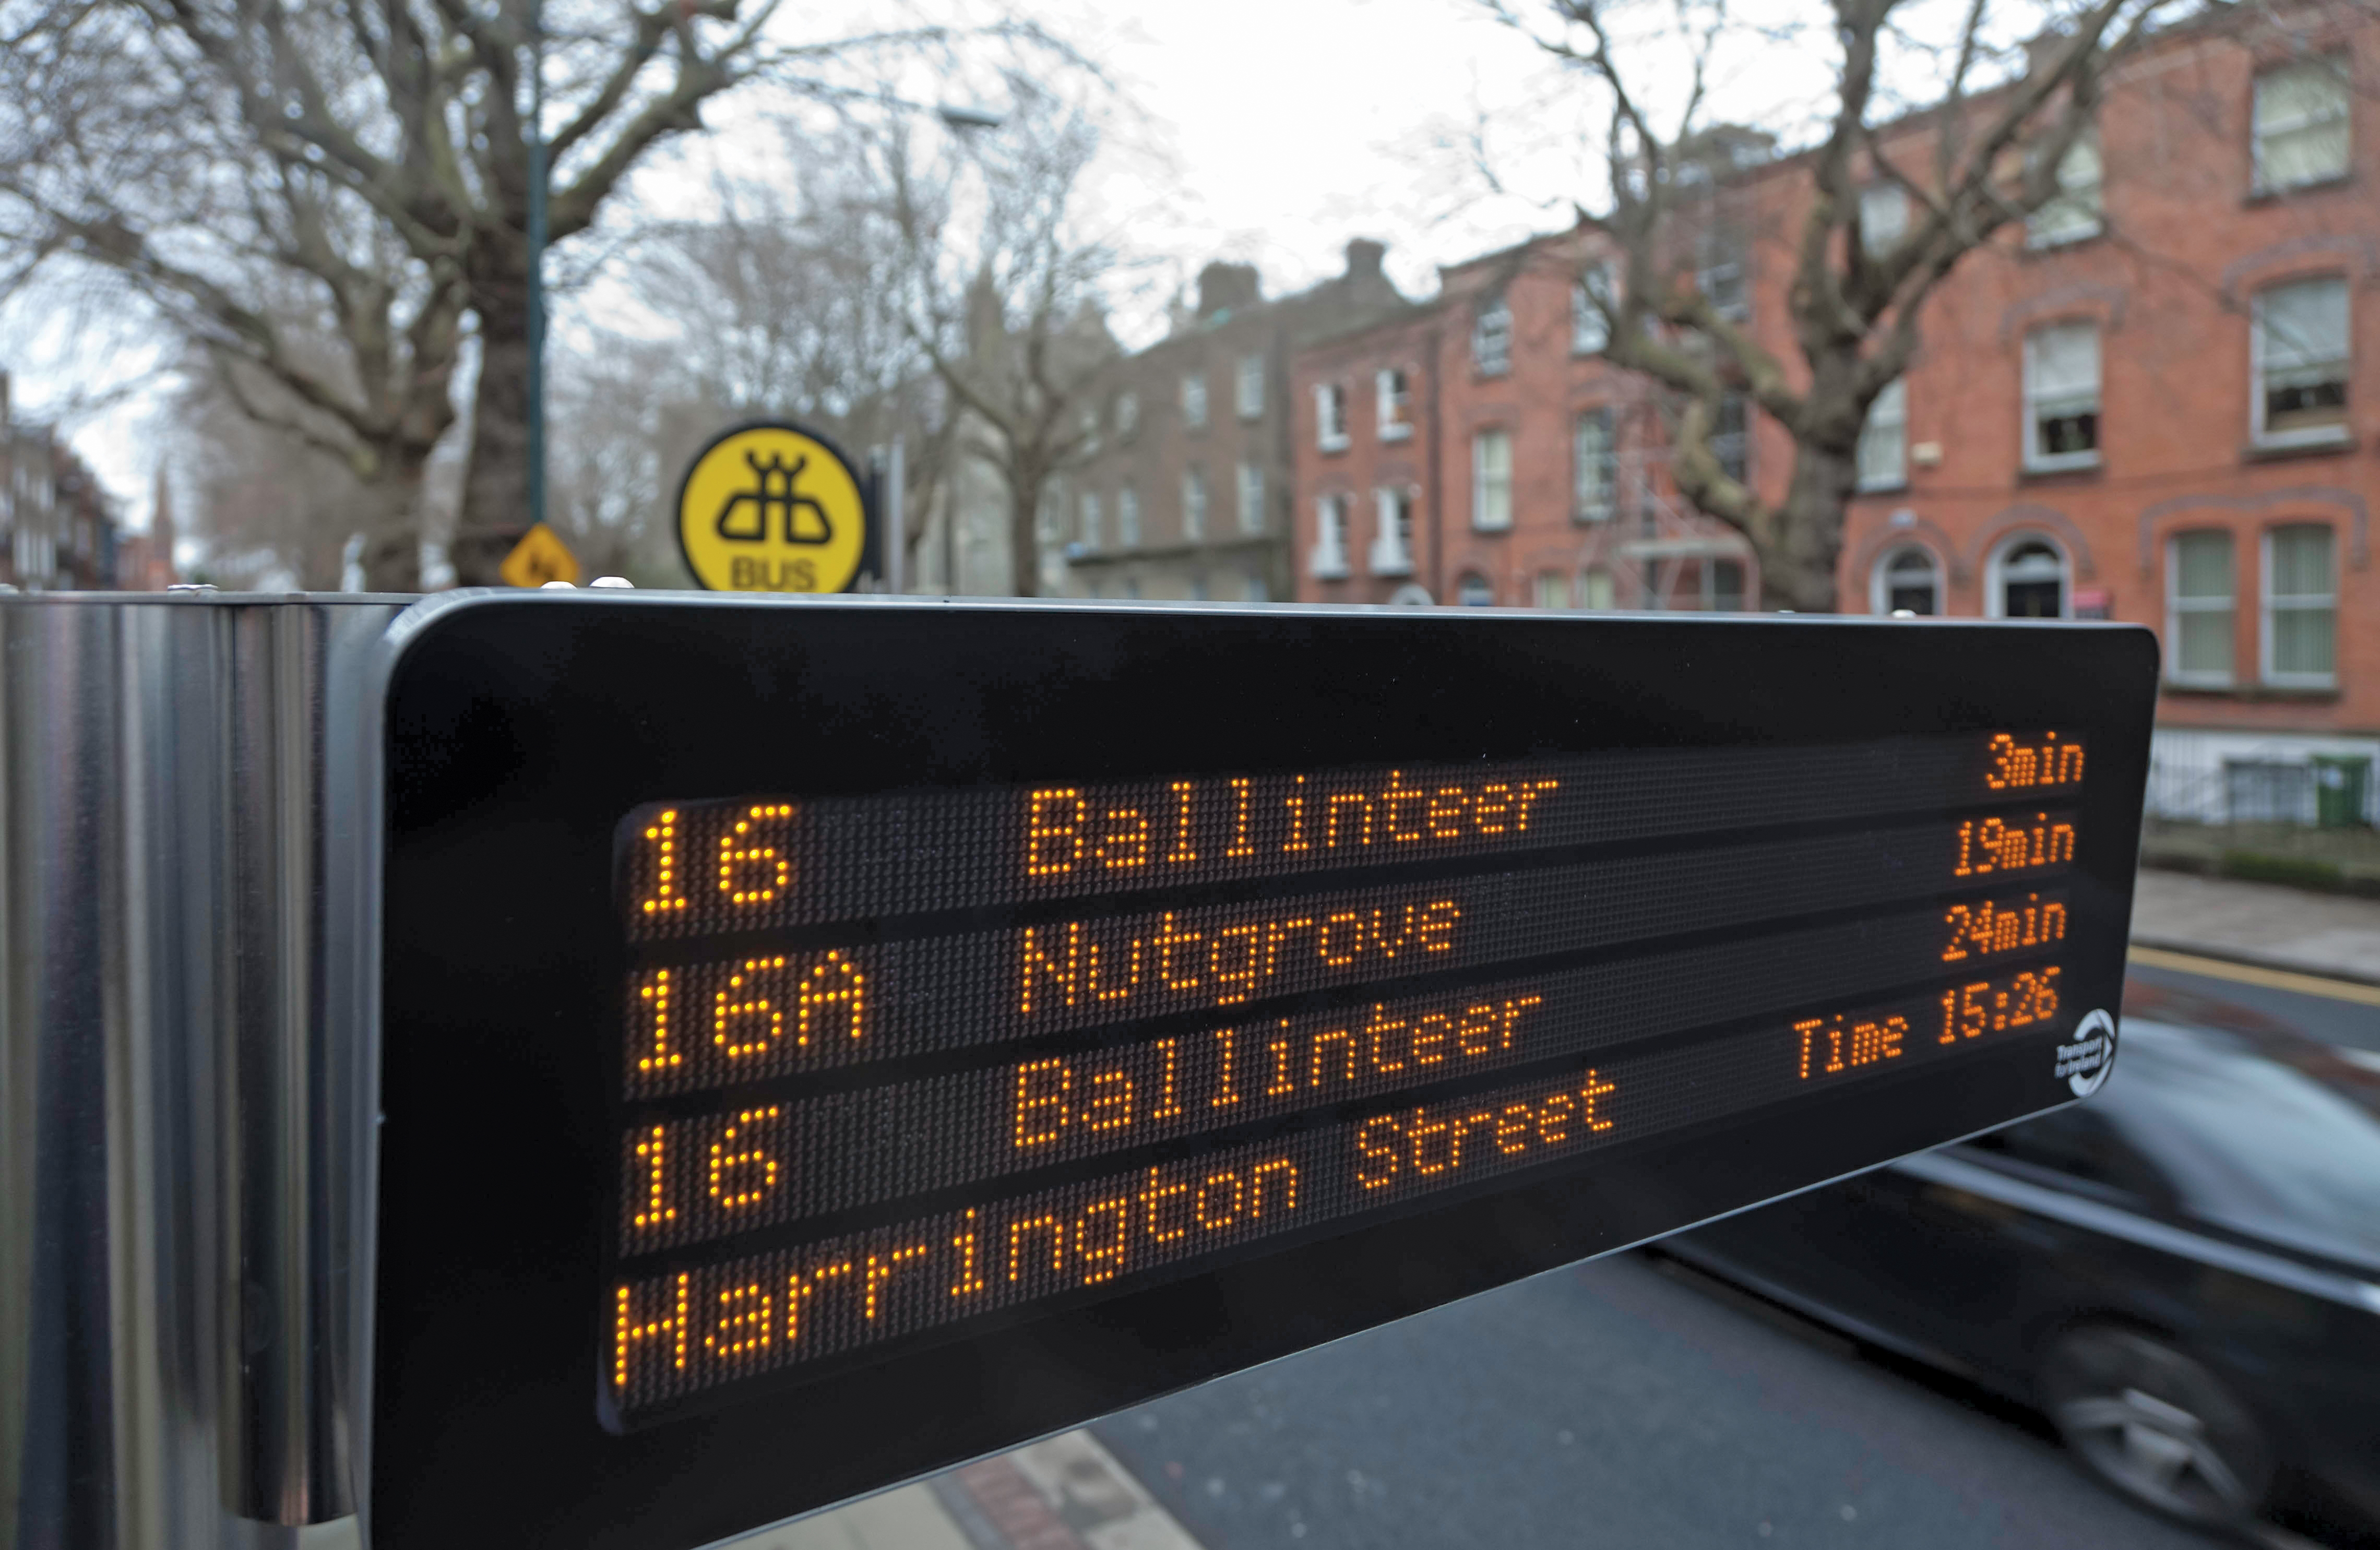 bus arrival prediction sign in Dublin